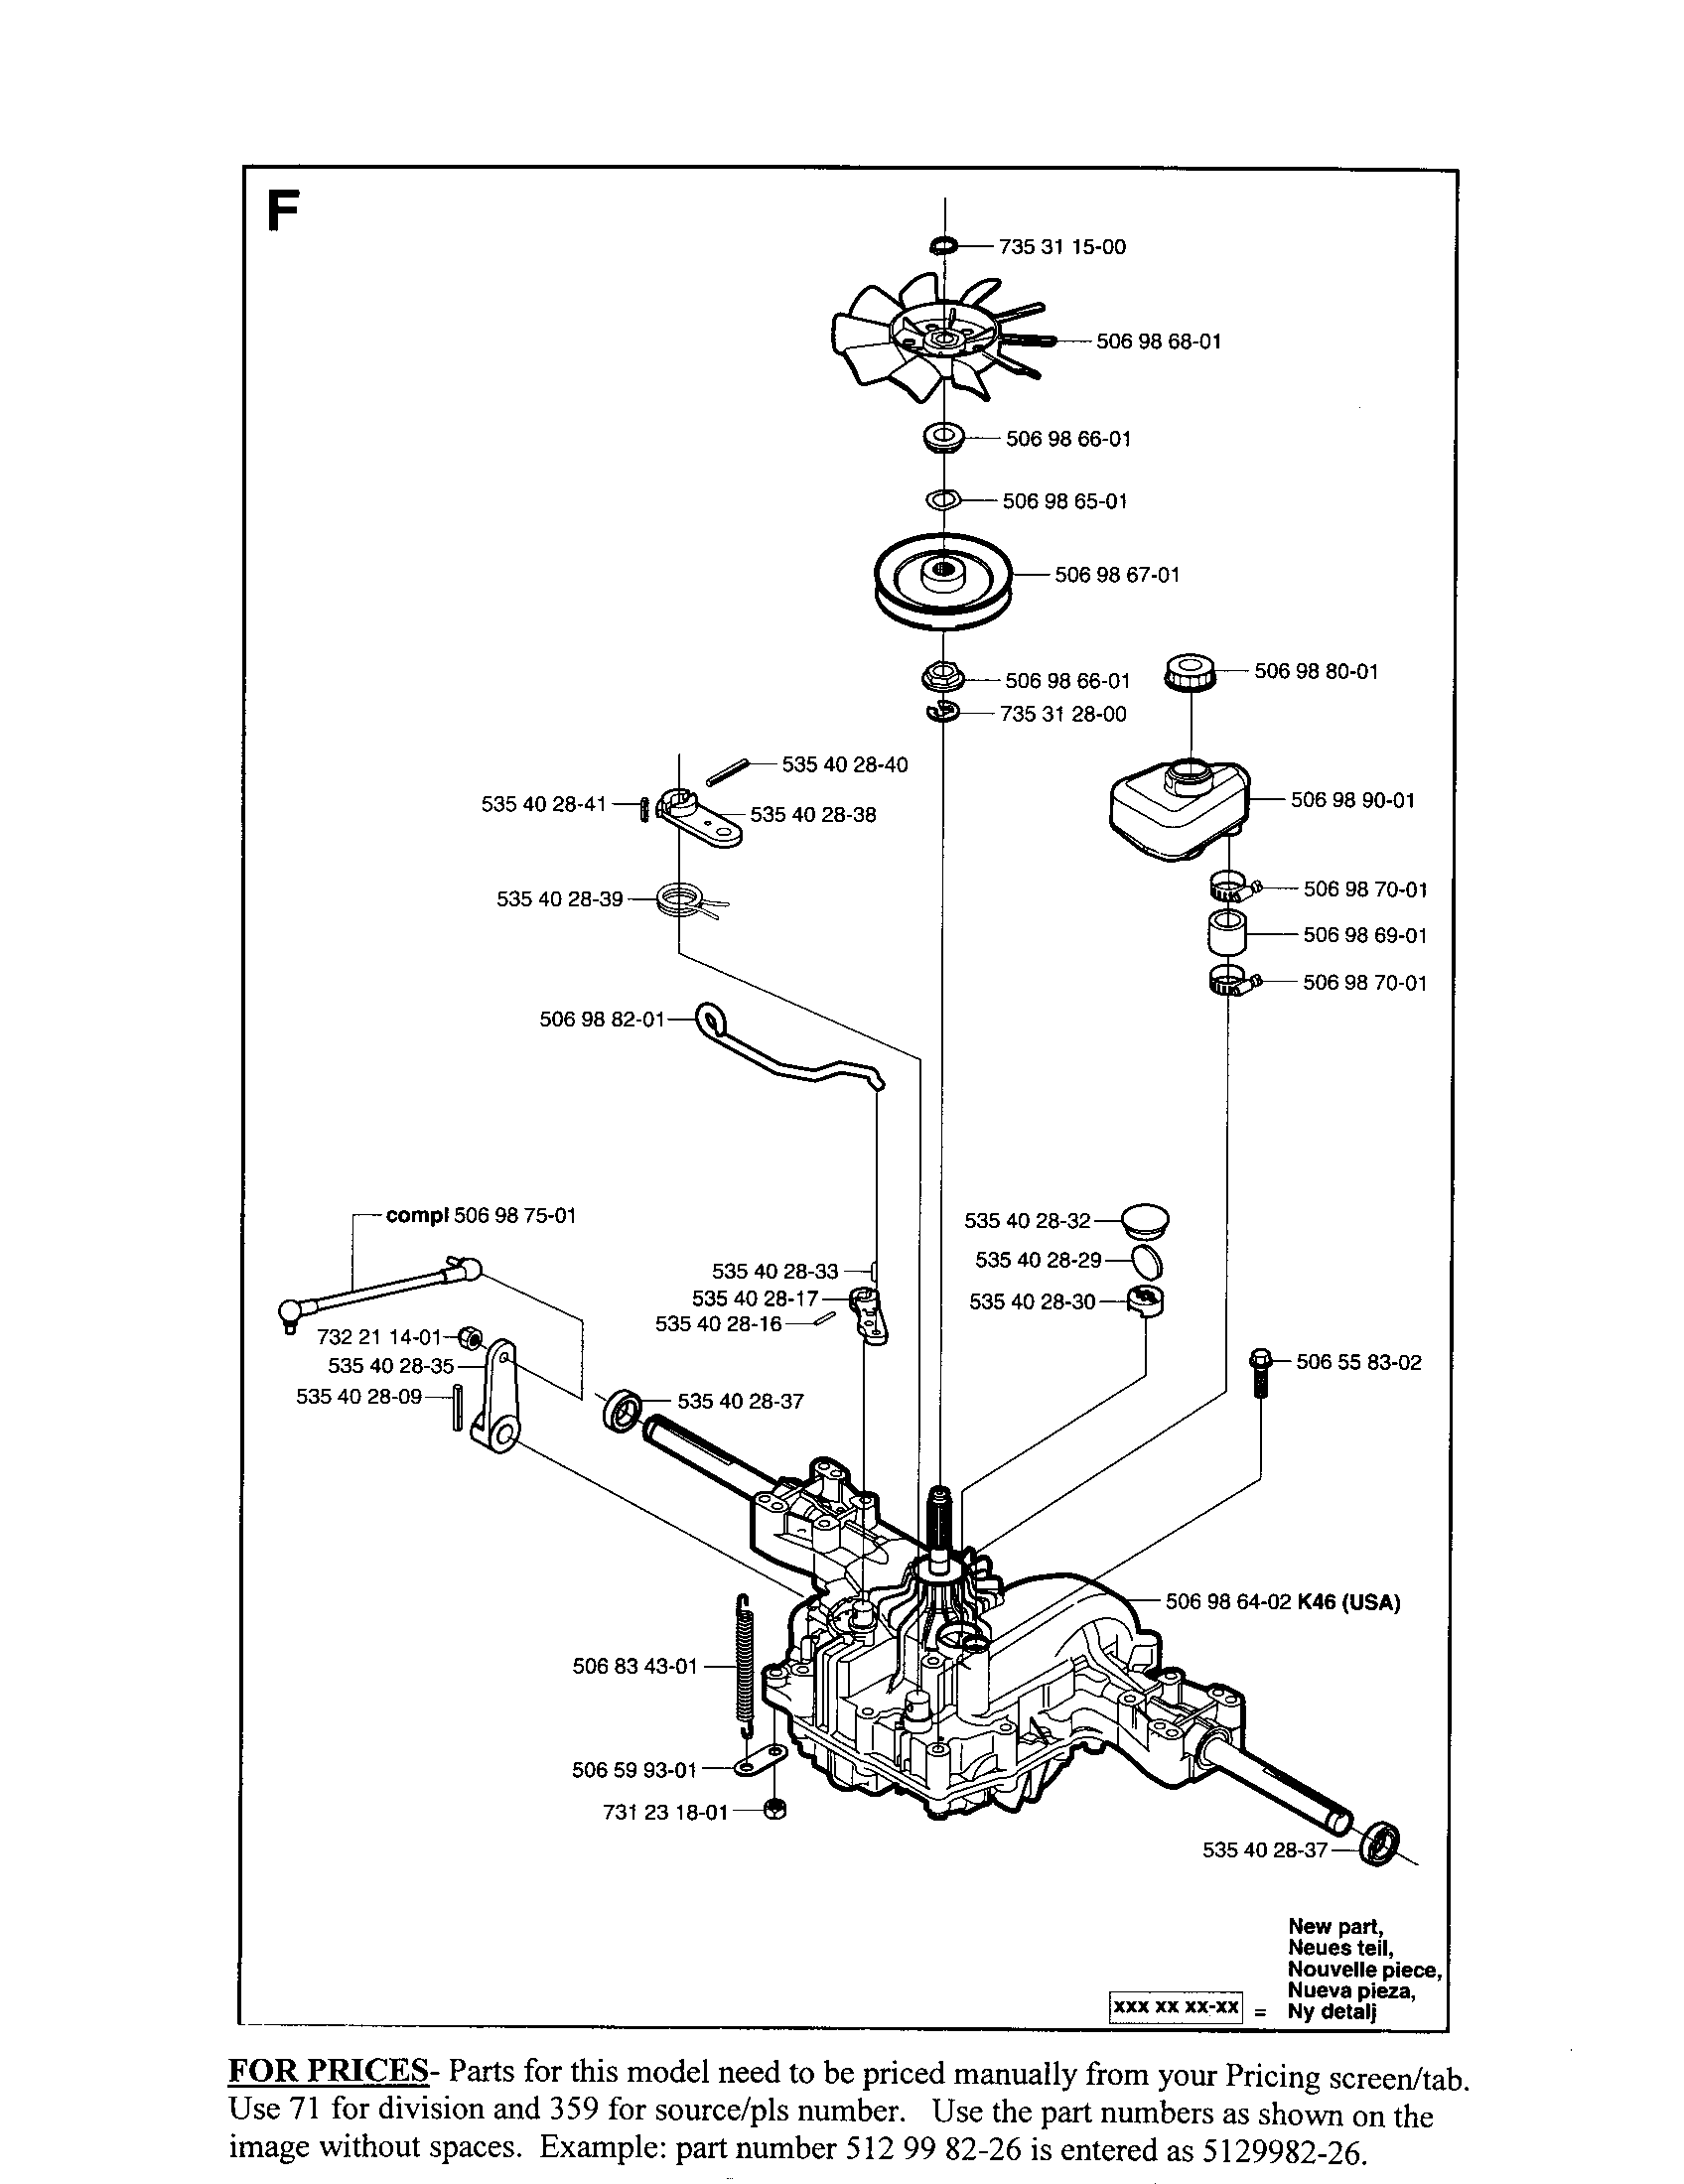 lth130 wiring diagram